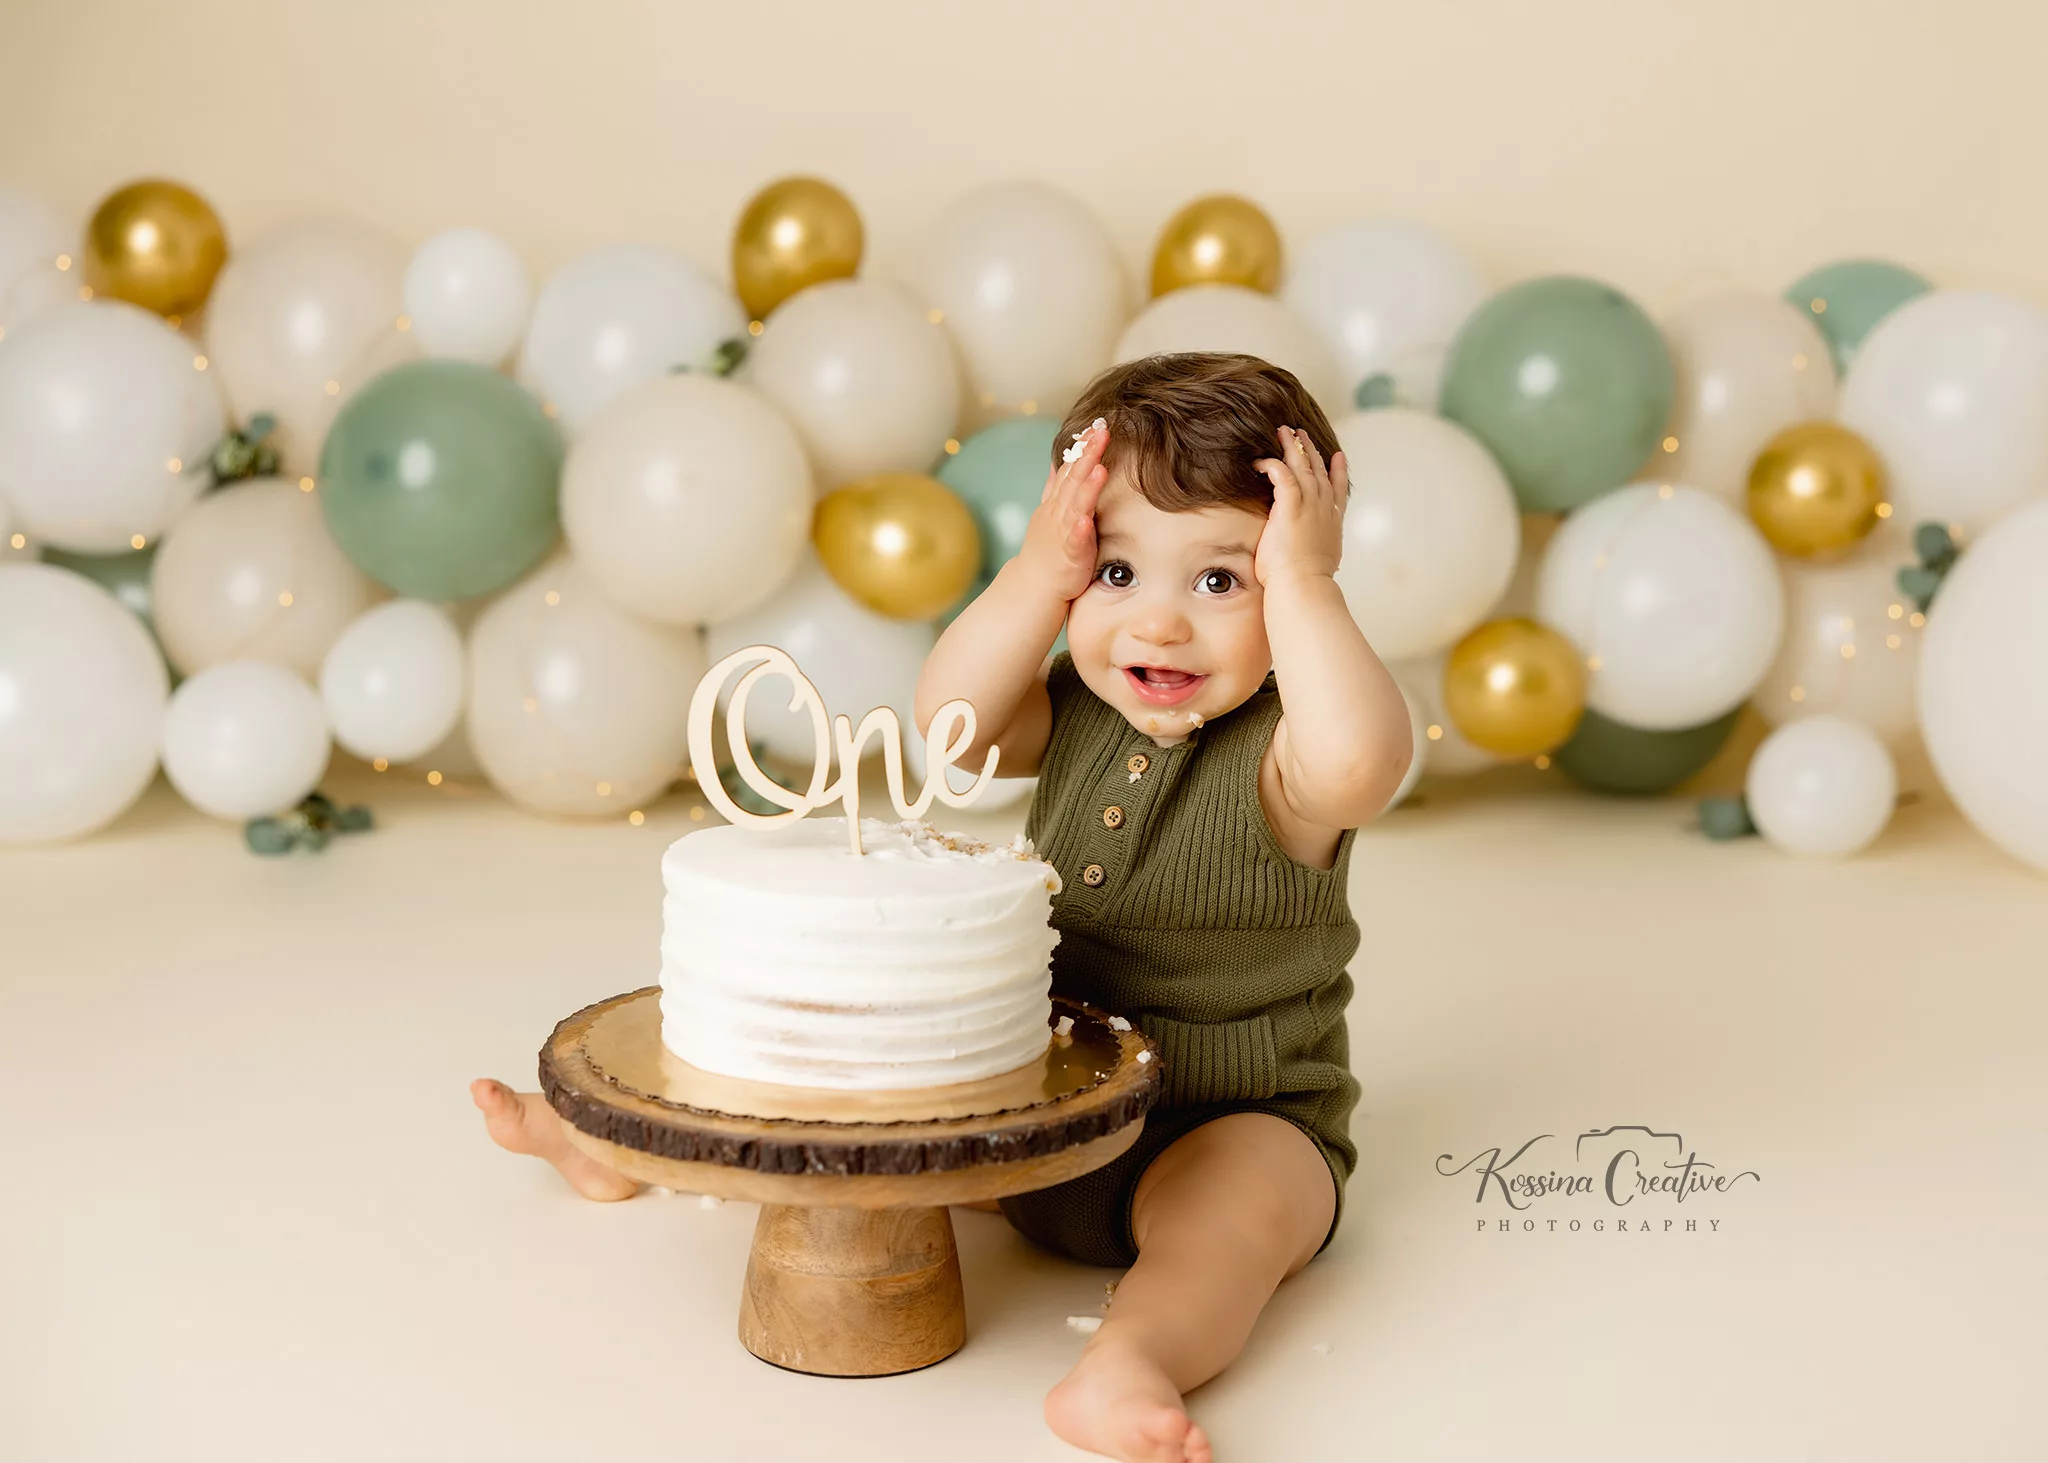 Orlando Boy Cake Smash 1st Birthday Photographer Photo Studio sage cream gold balloon garland simple classic cake